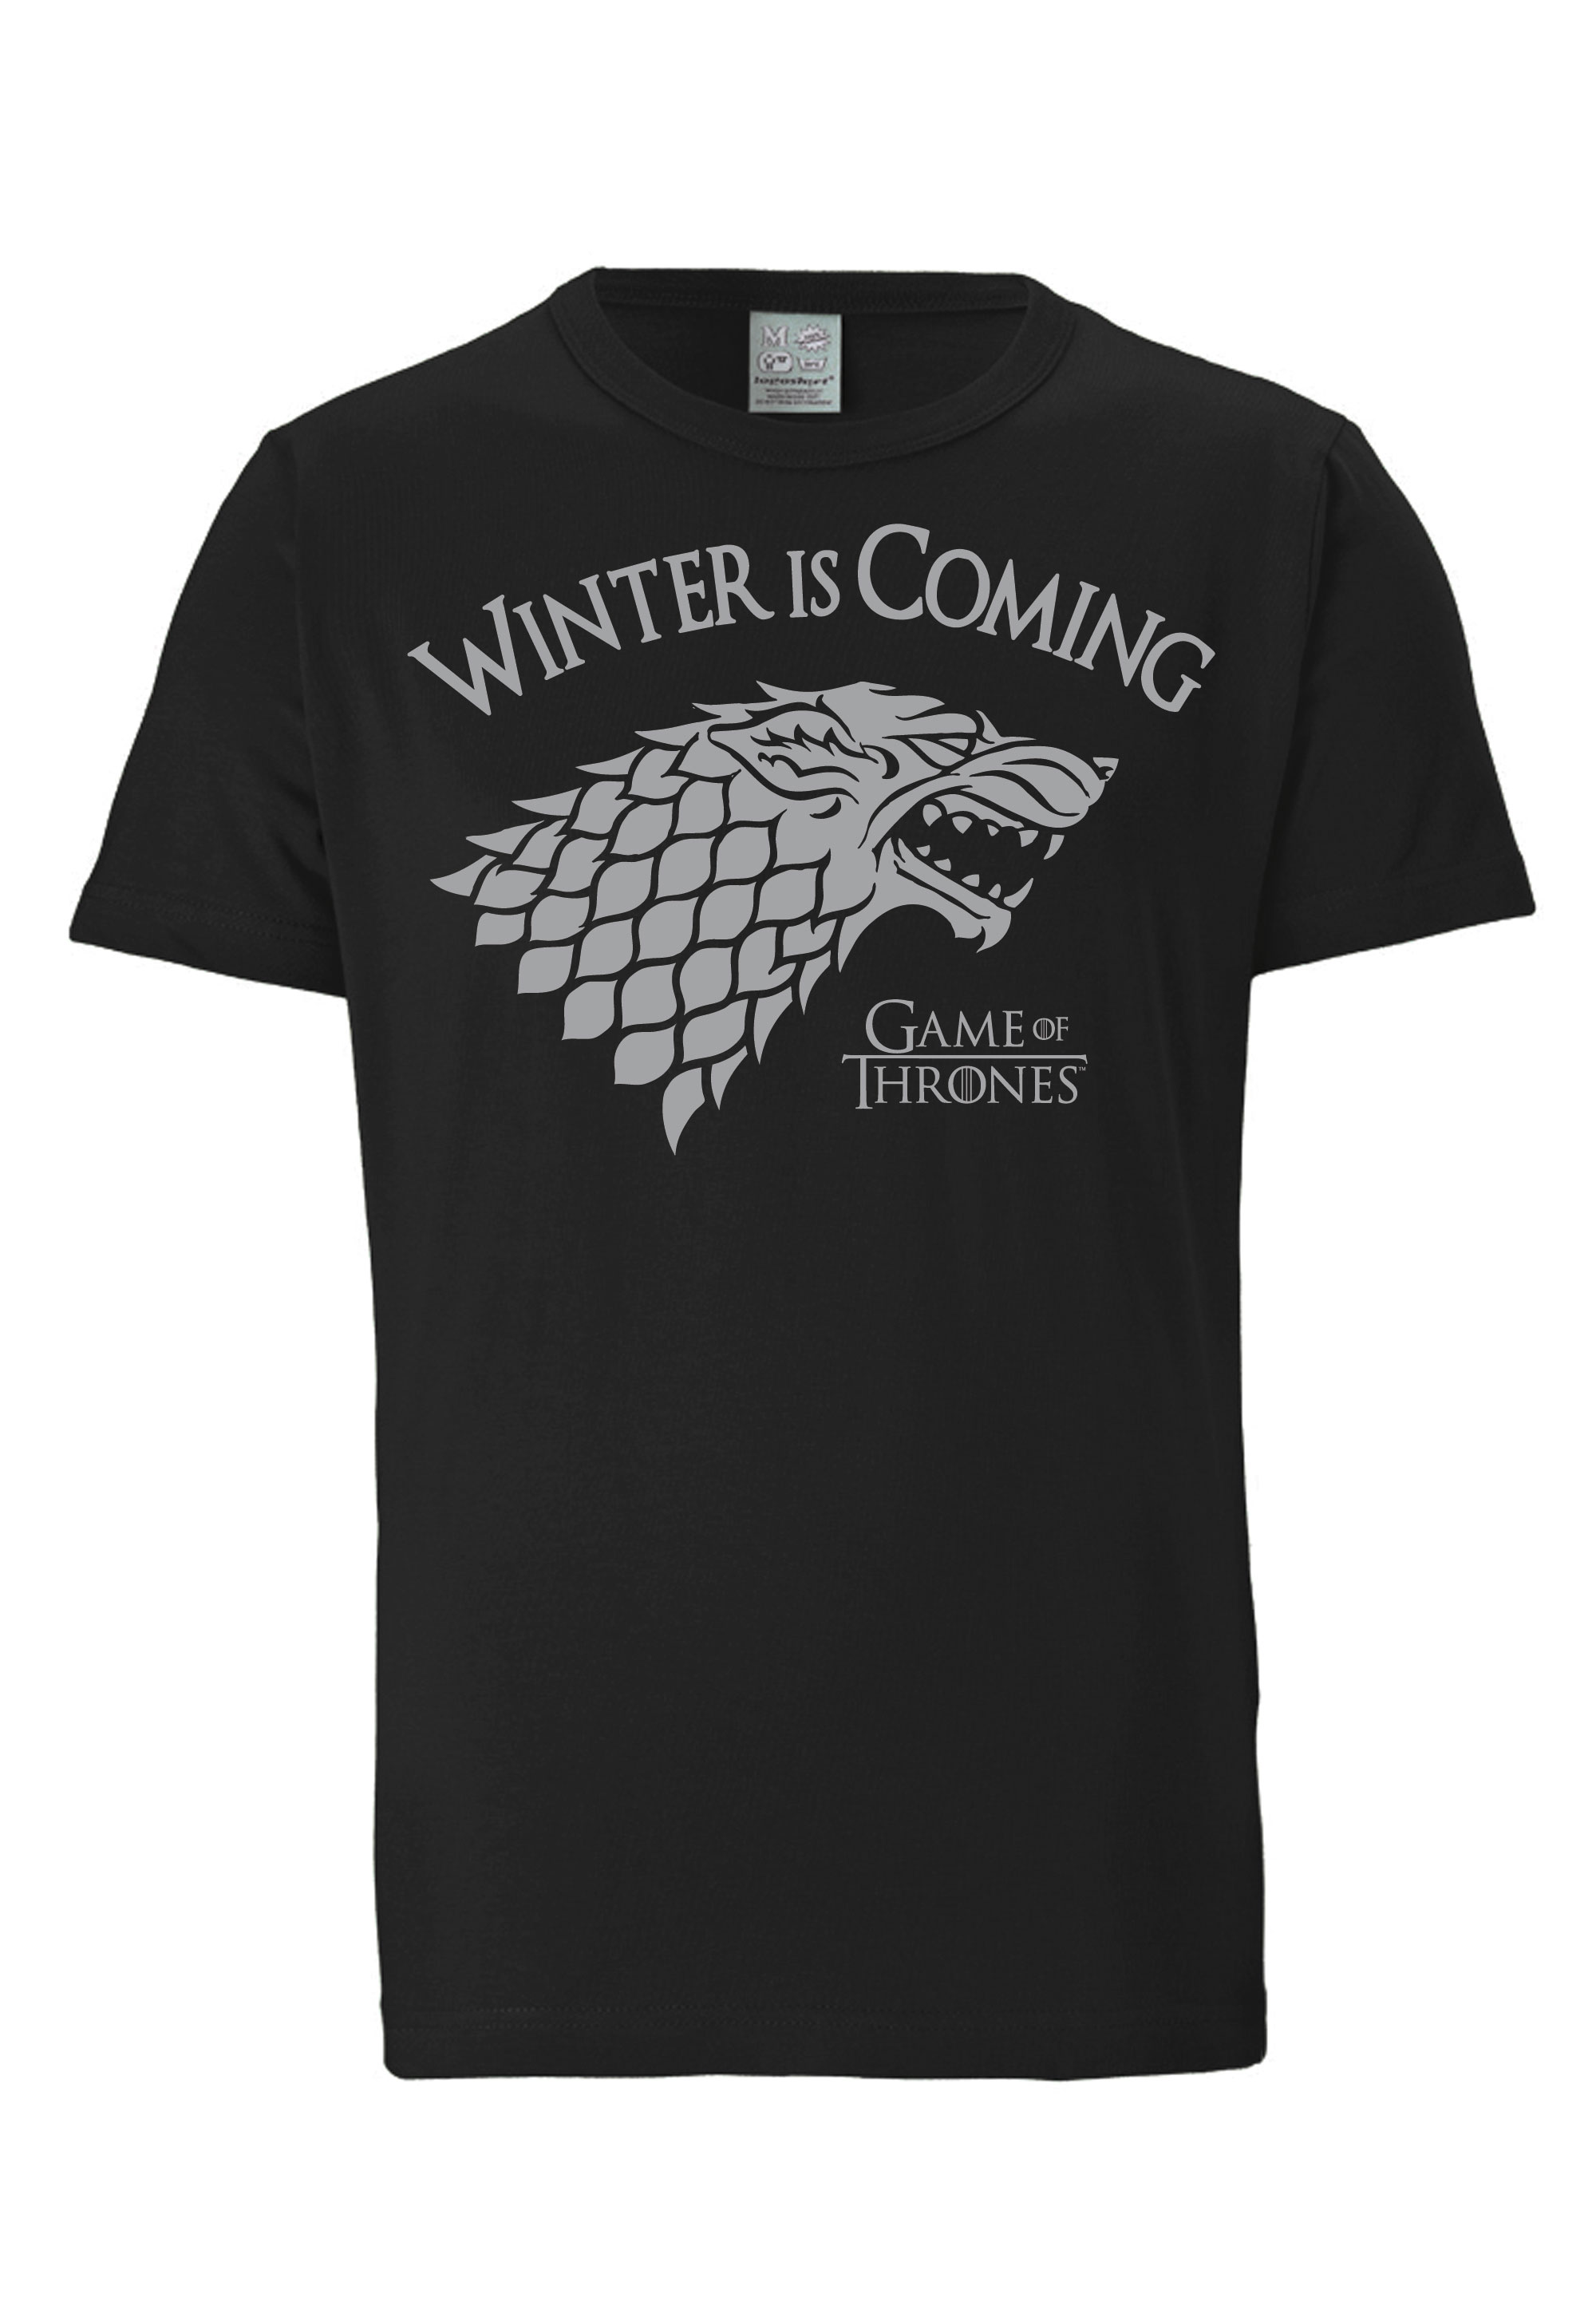 Футболка Logoshirt Game of Thrones Winter Is Coming, черный printio сумка winter is coming game of thrones